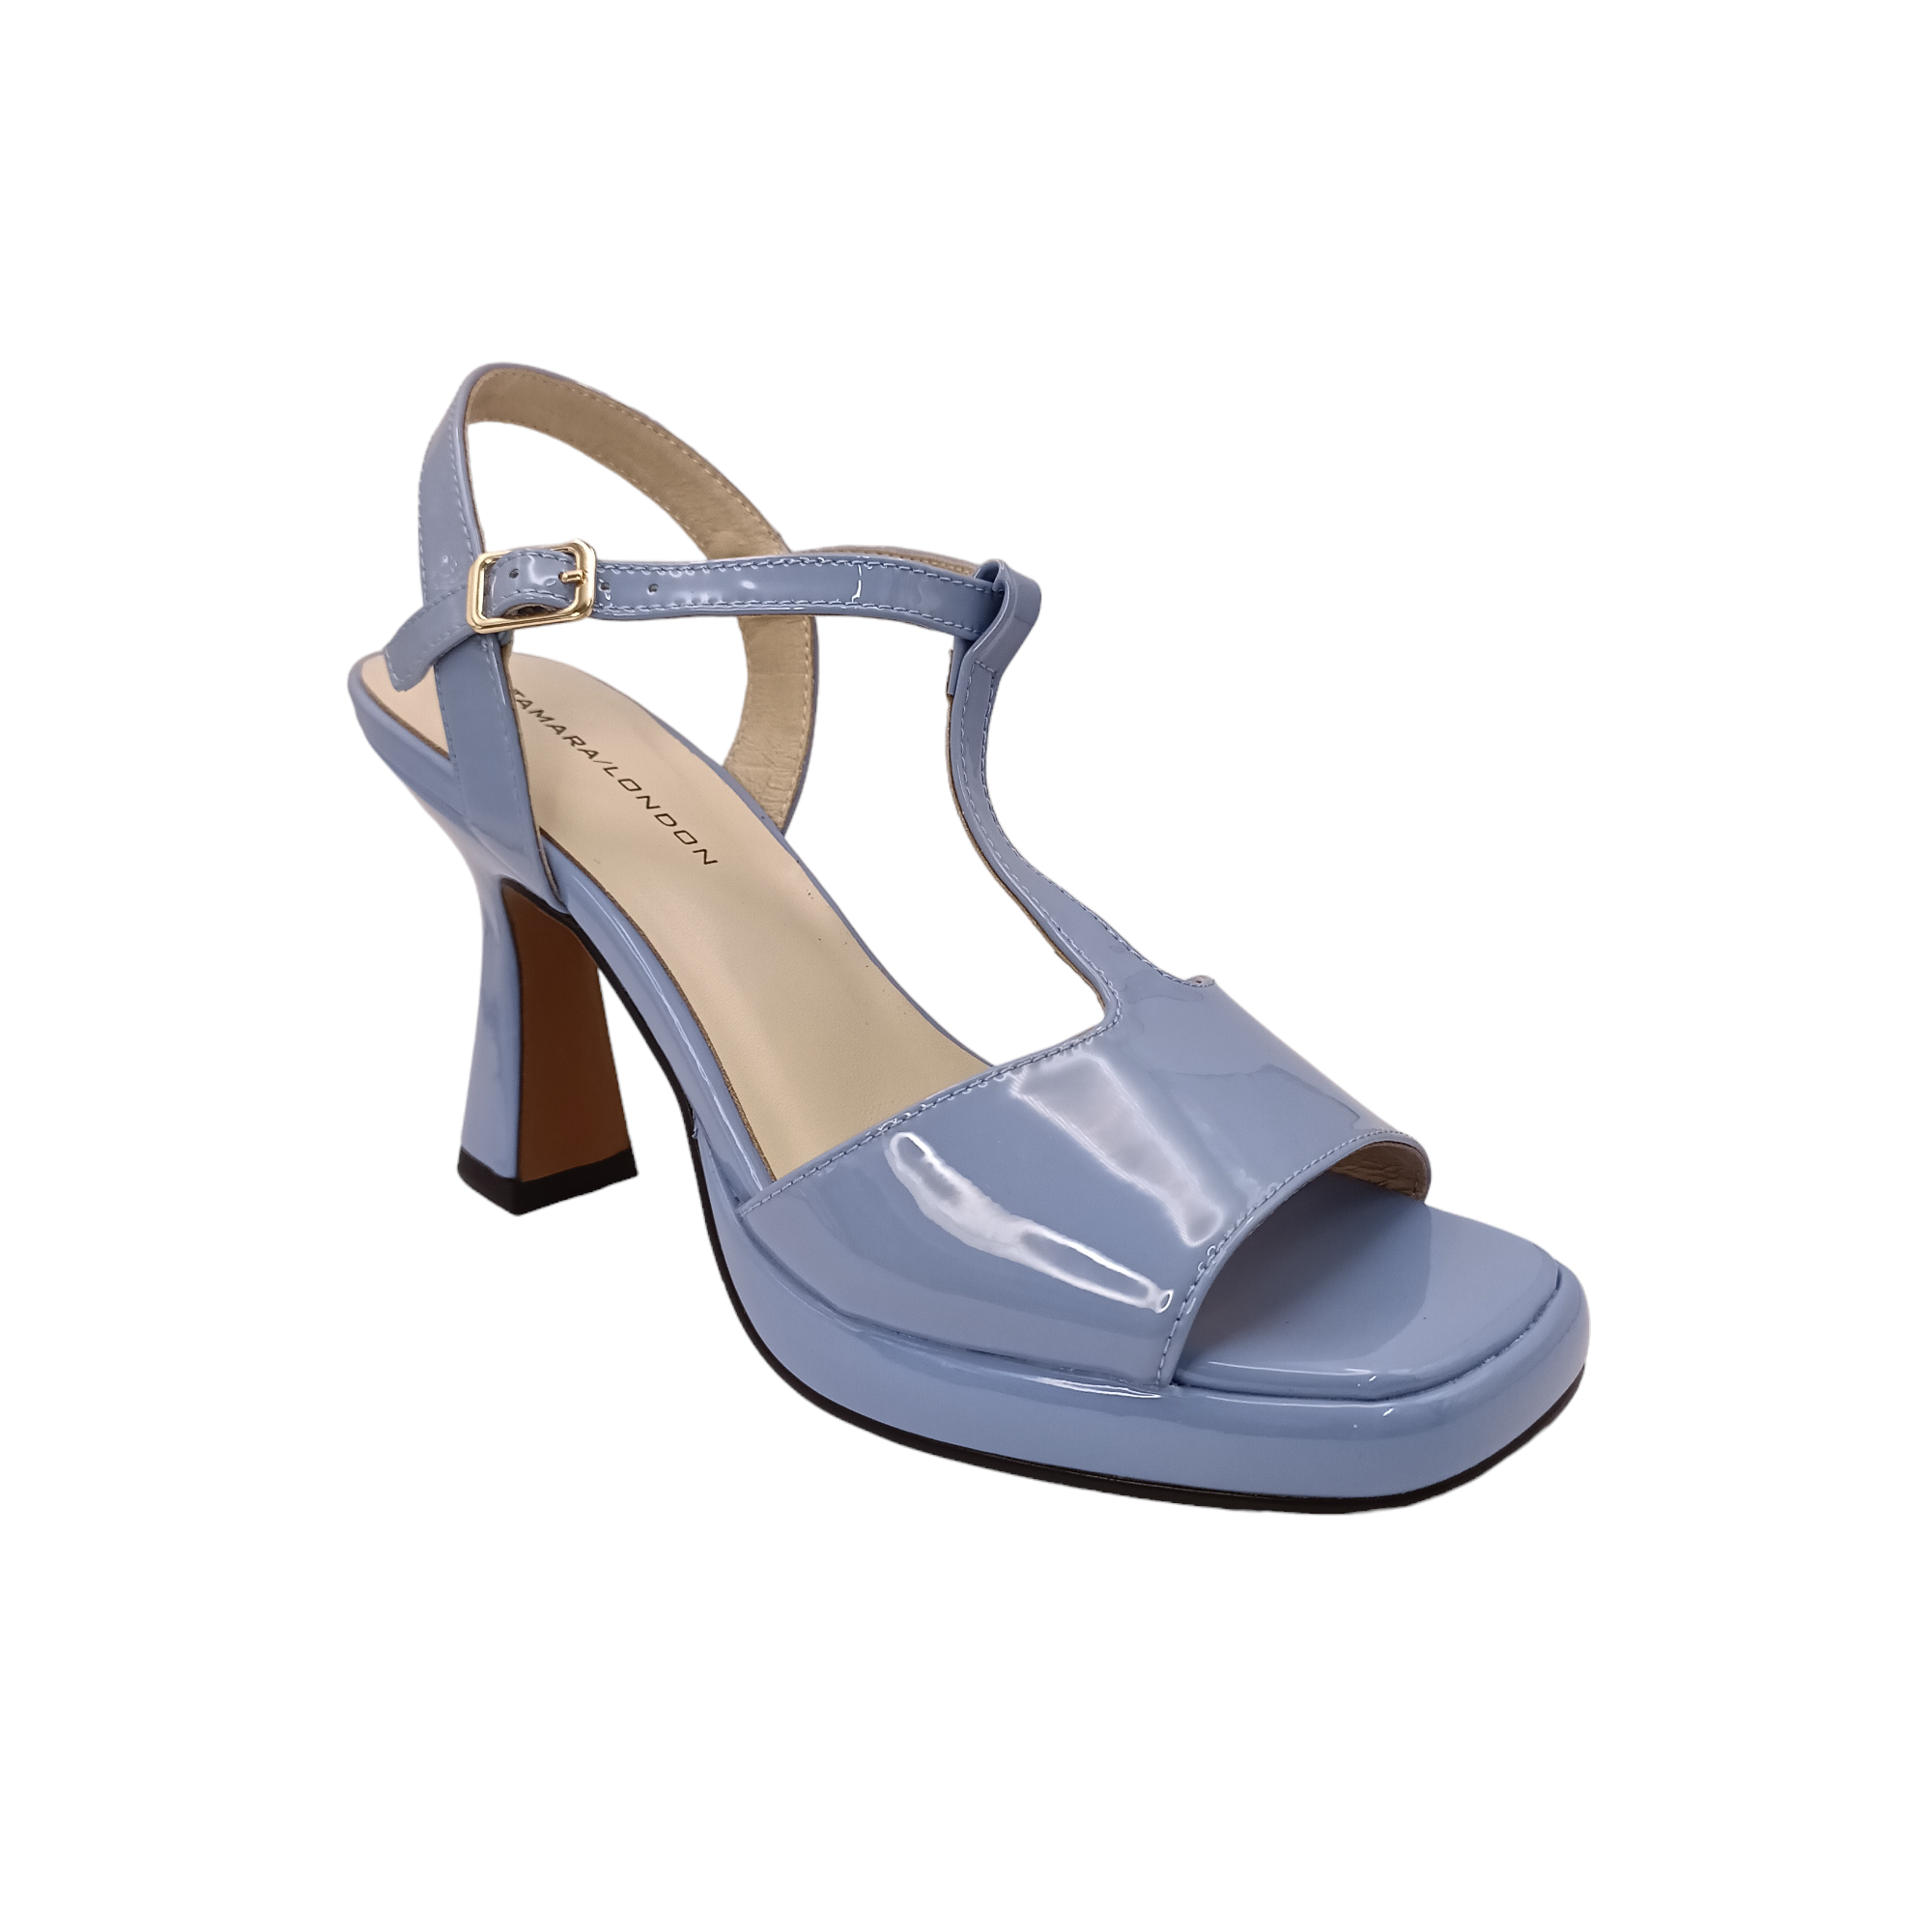 Bilbo - shoe&me - Tamara - Sandal - Heels, Sandals, Summer, Womens